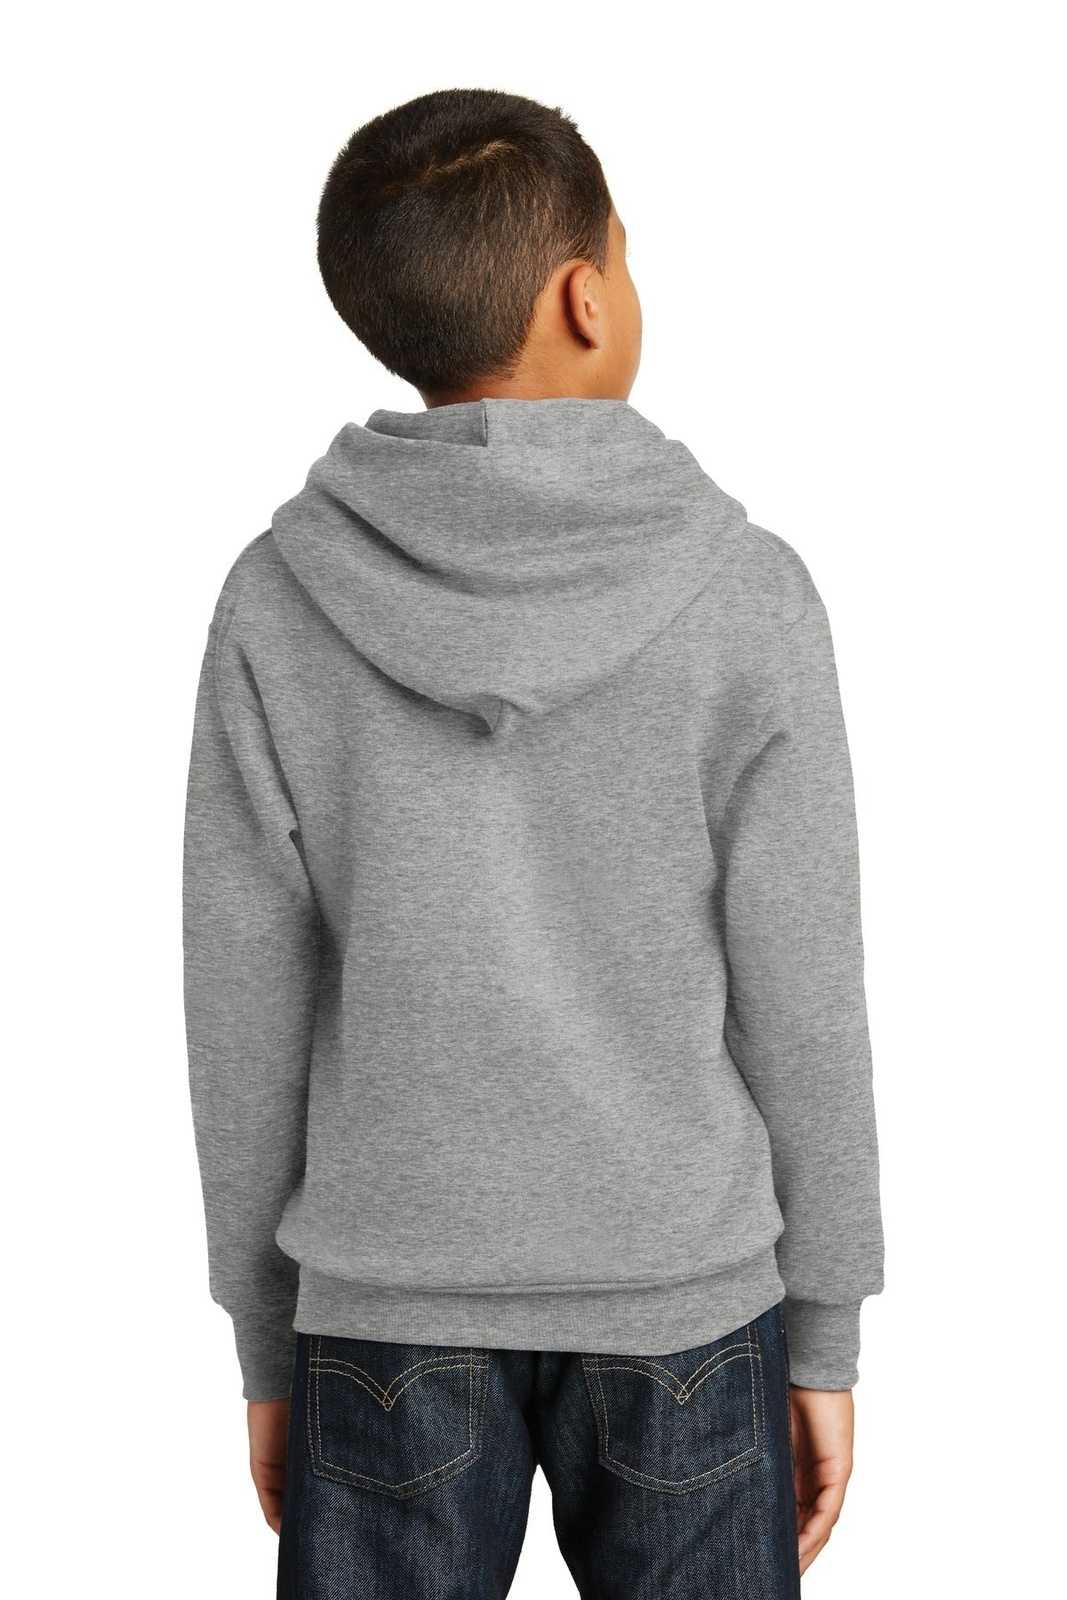 Hanes P470 Youth Ecosmart Pullover Hooded Sweatshirt - Light Steel - HIT a Double